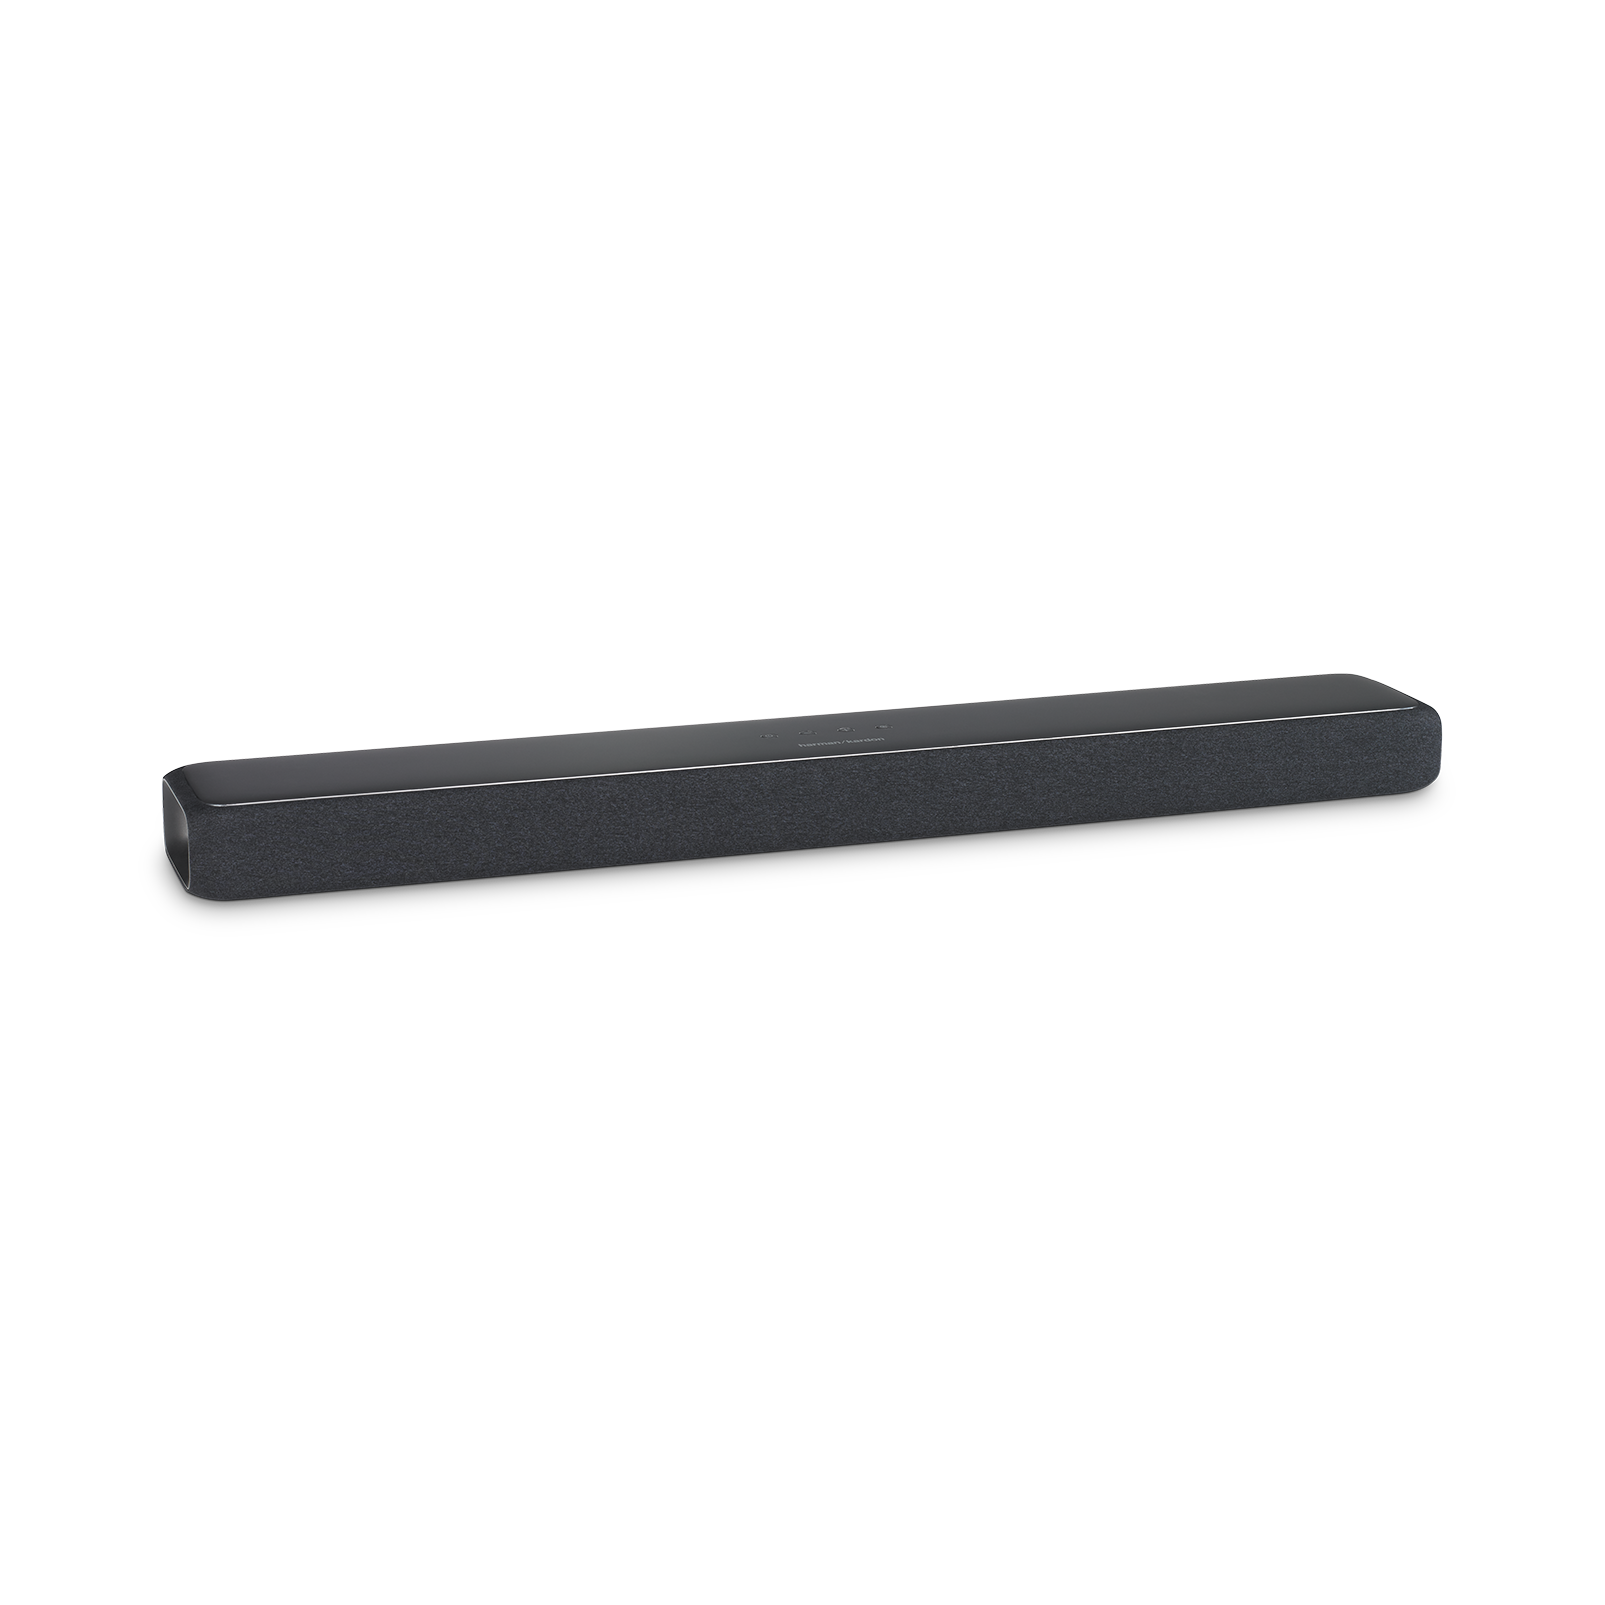 Harman Kardon Enchance 800  Sound Bar  Gray  Chromecast Wifi - HKENCH800GRAAM